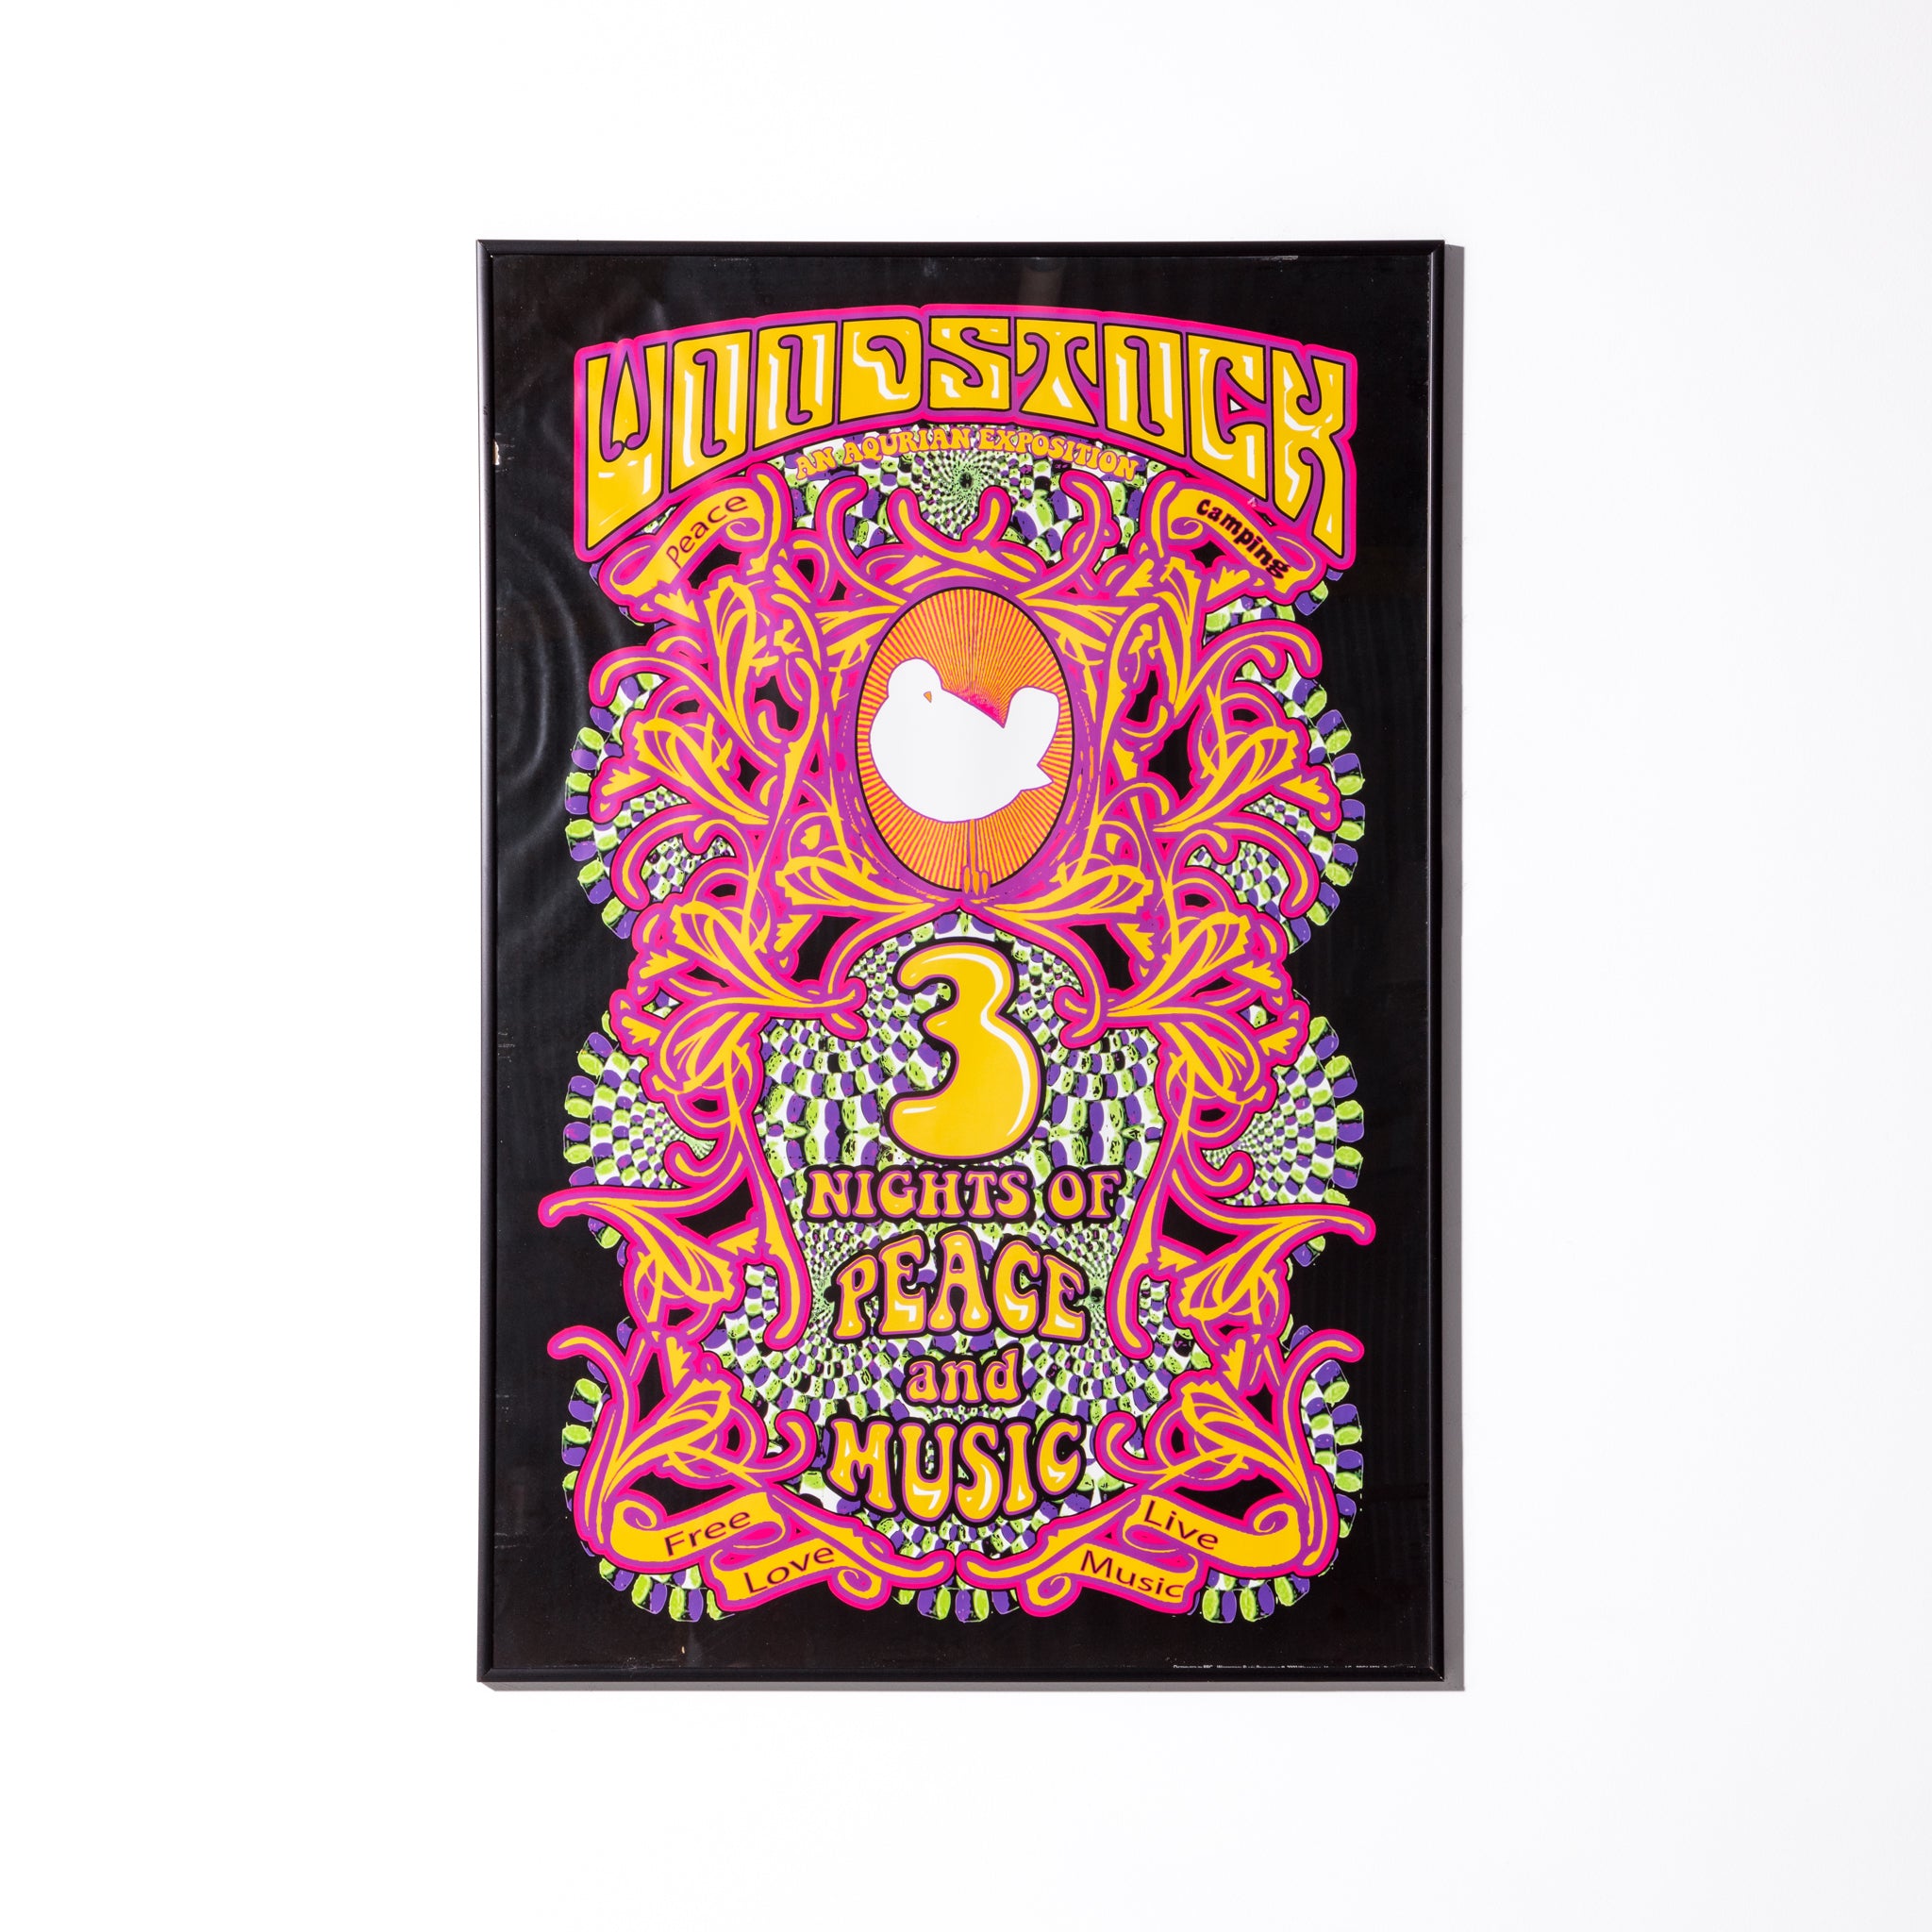 Vintage Woodstock poster